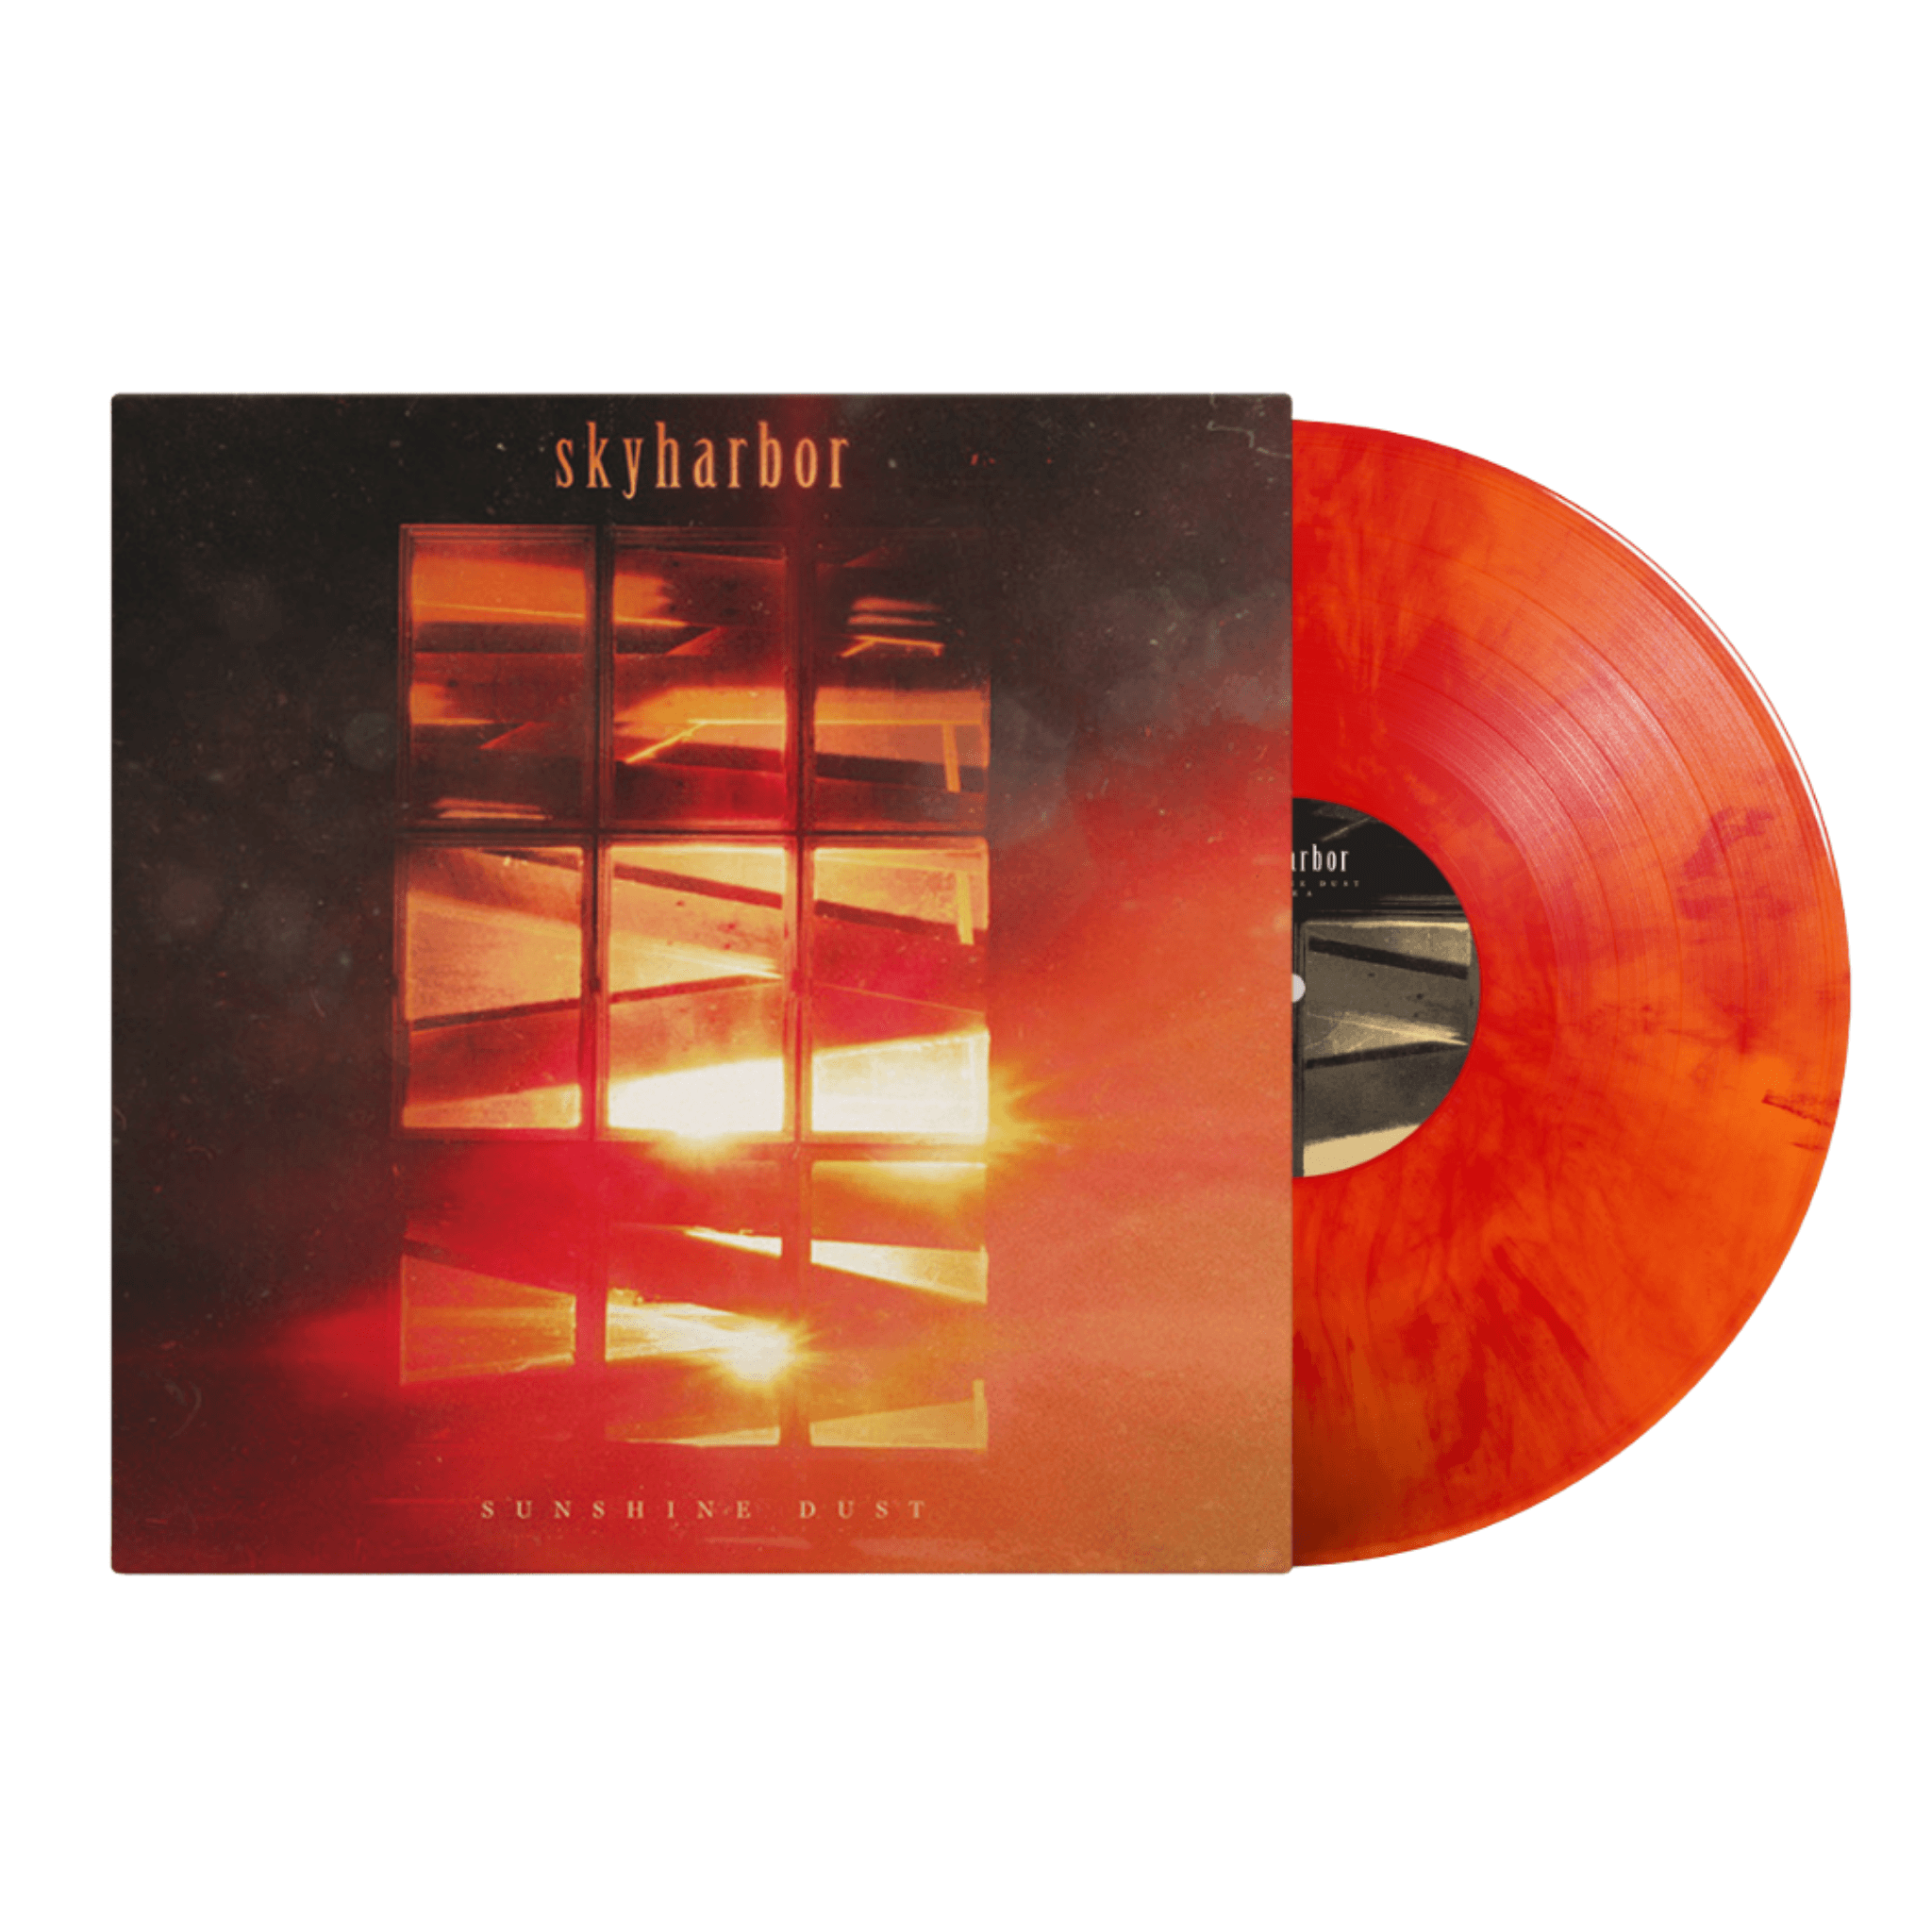 Skyharbor - Sunshine Dust Red Galaxy Vinyl LP (Blemished)